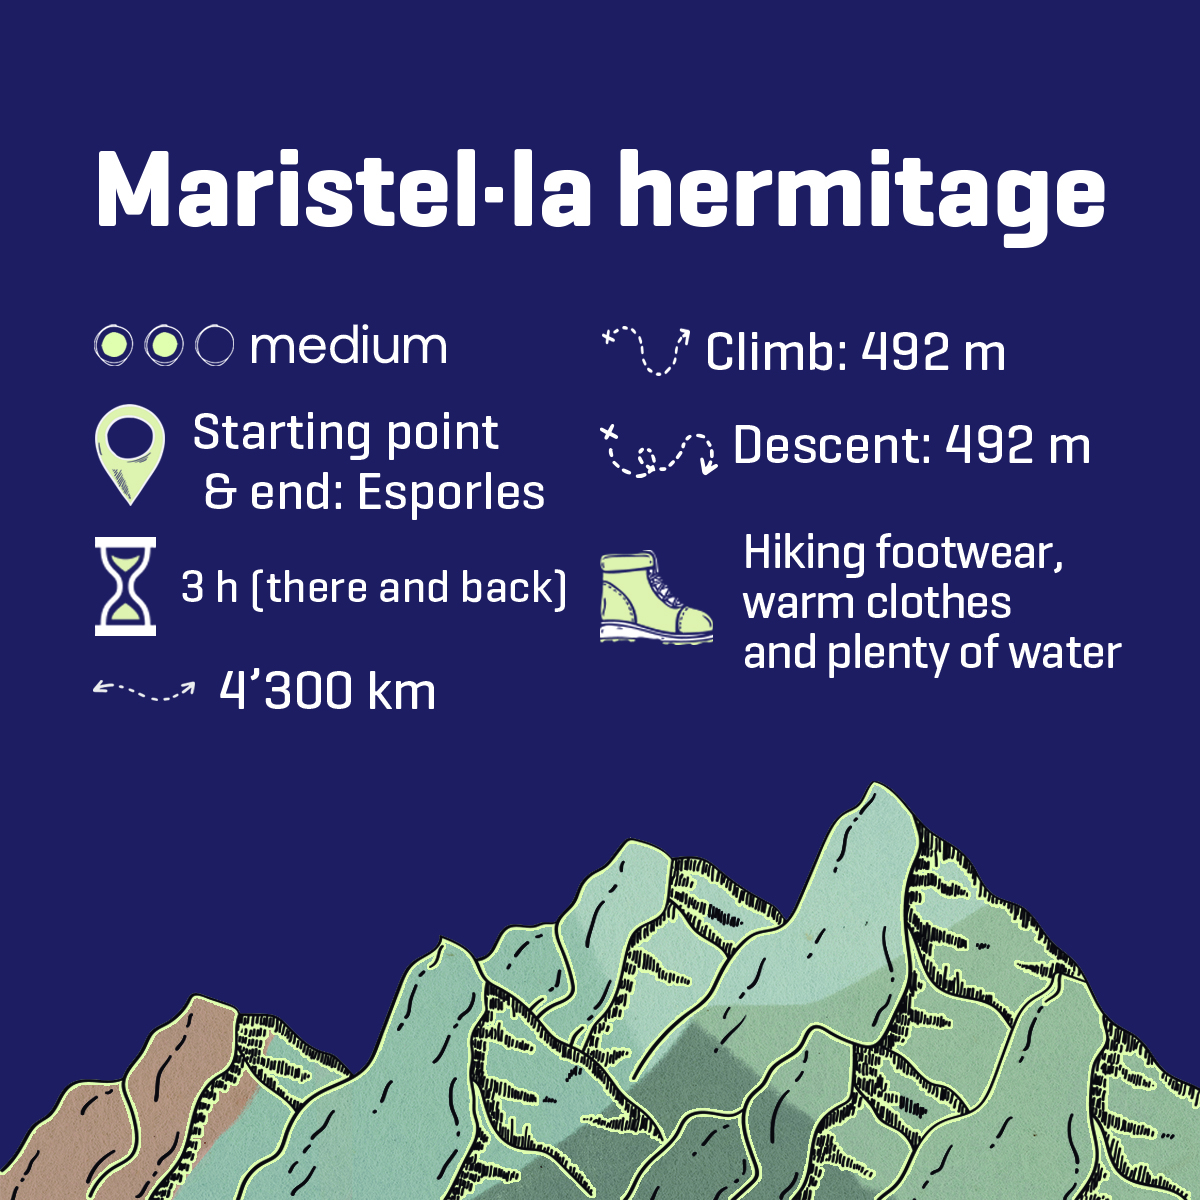 Maristel·la hermitage